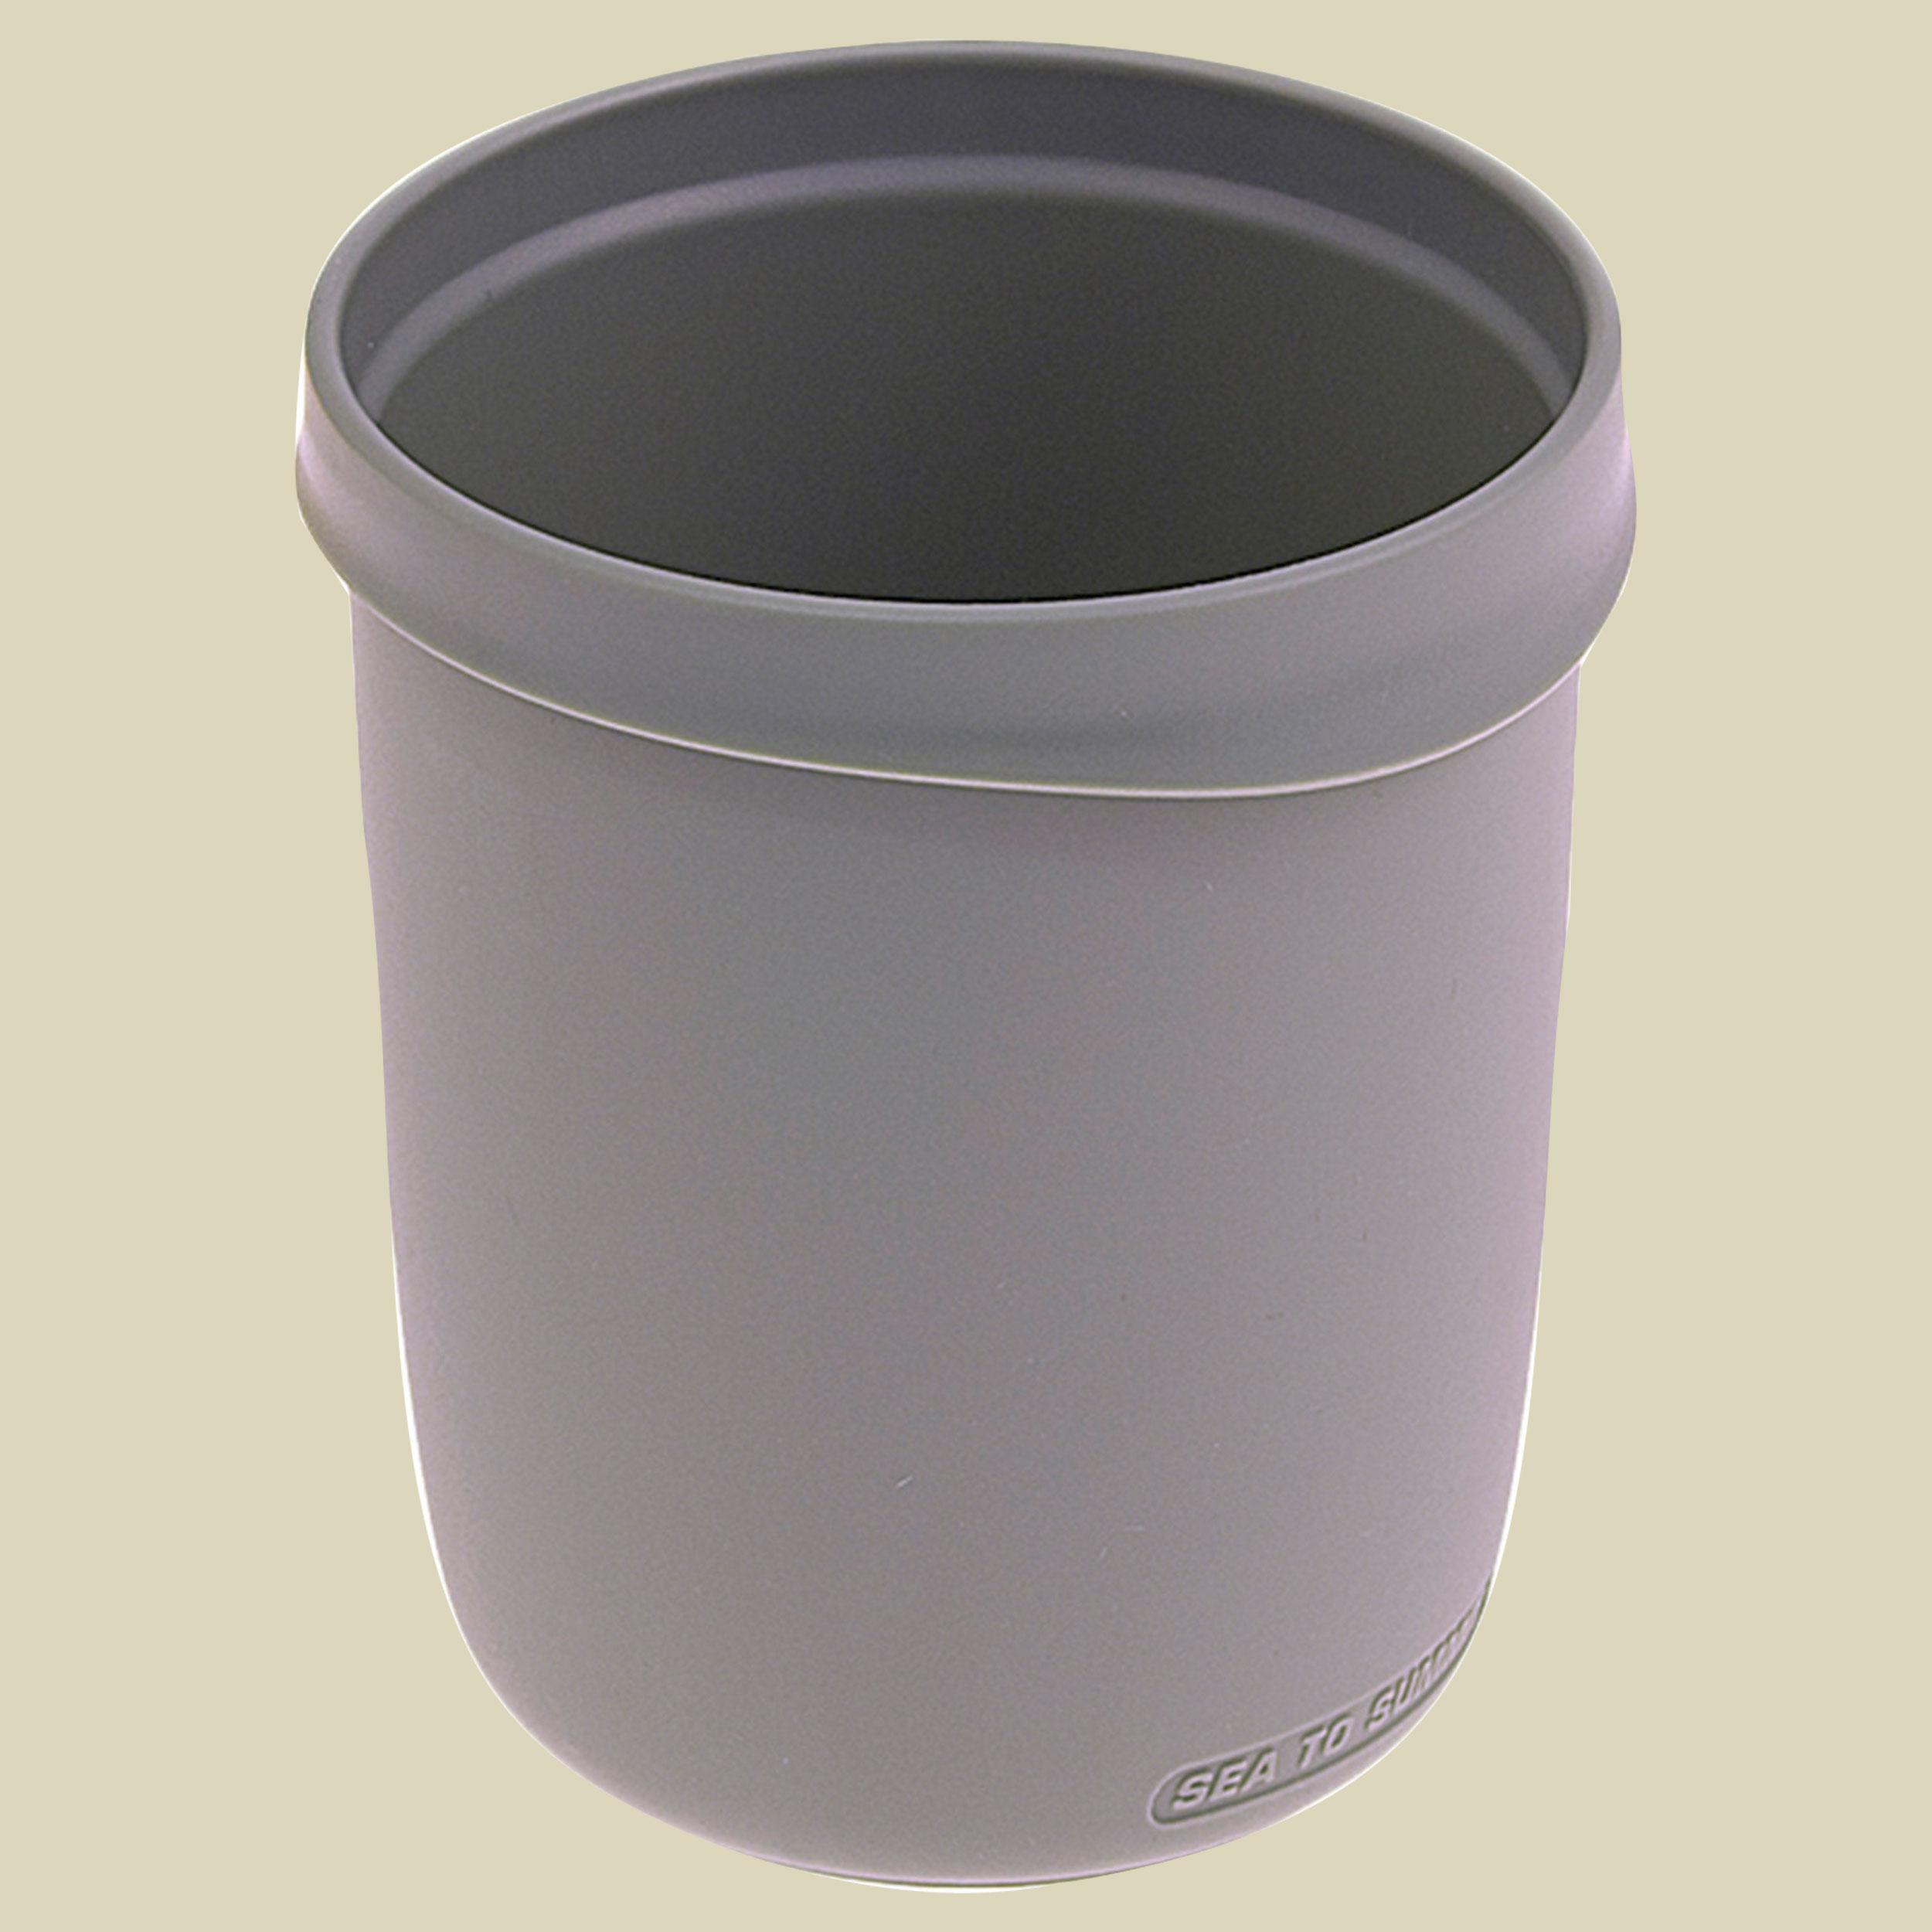 Delta Mug Volumen in ml 473 Farbe grey